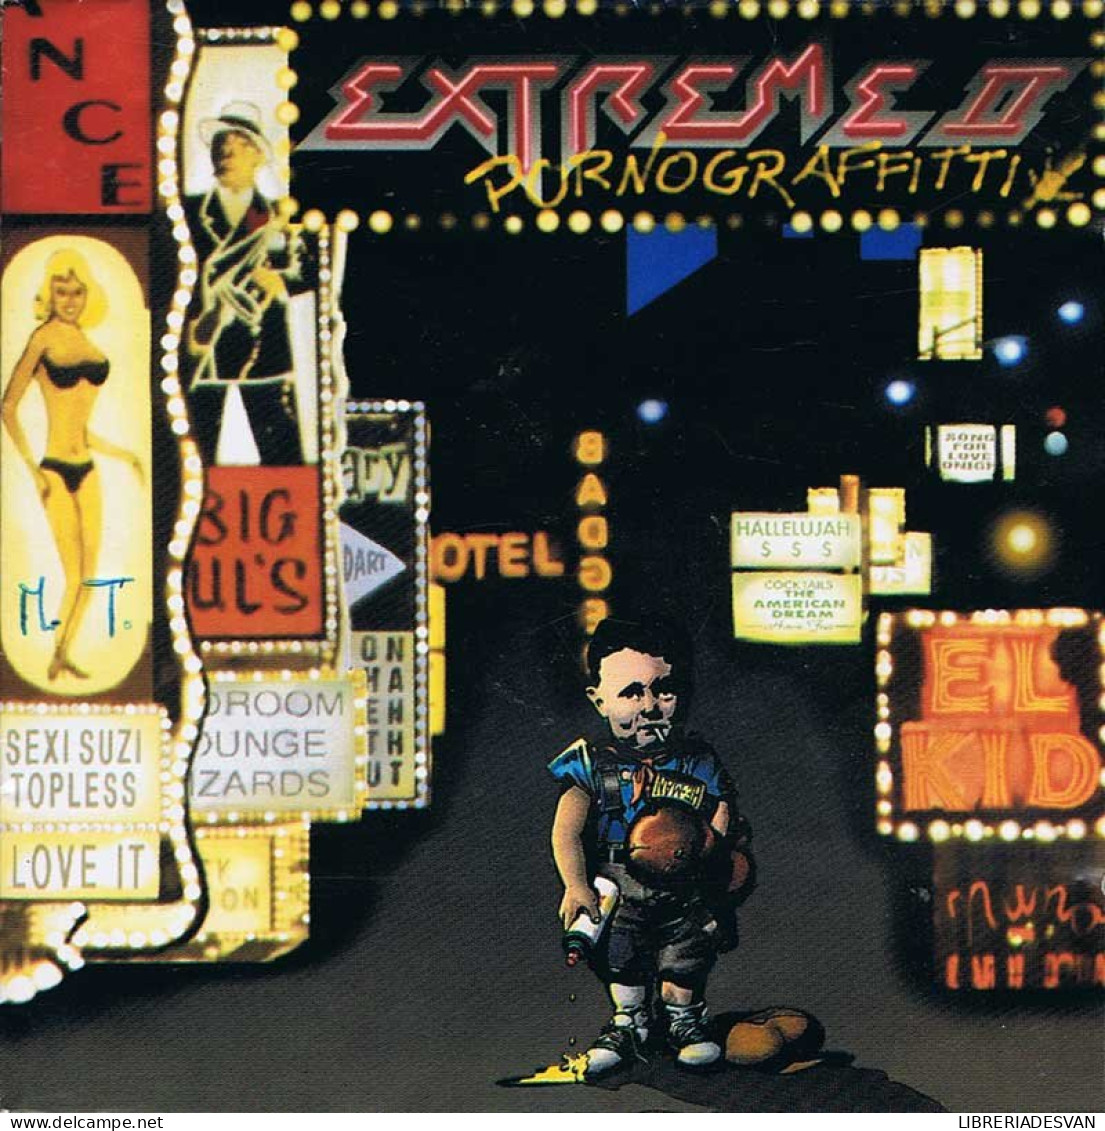 Extreme II - Pornografitti. CD - Rock